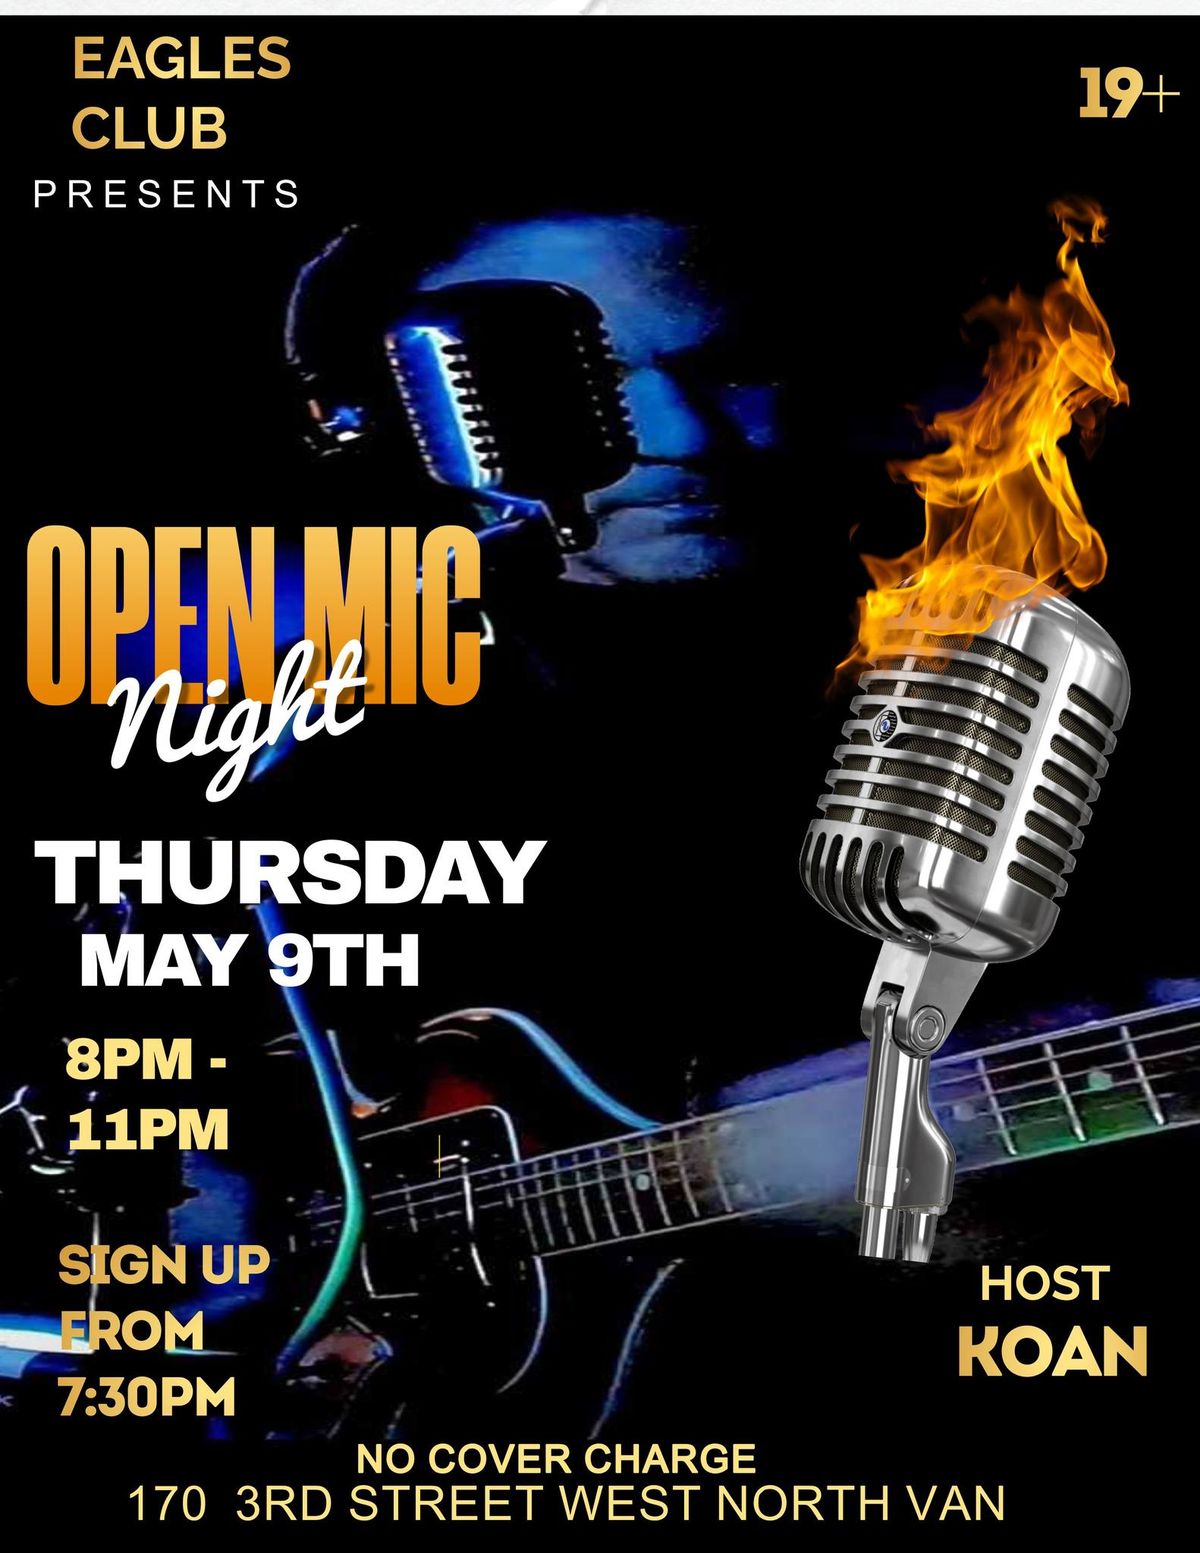 Open mic music night with Host Koan! 